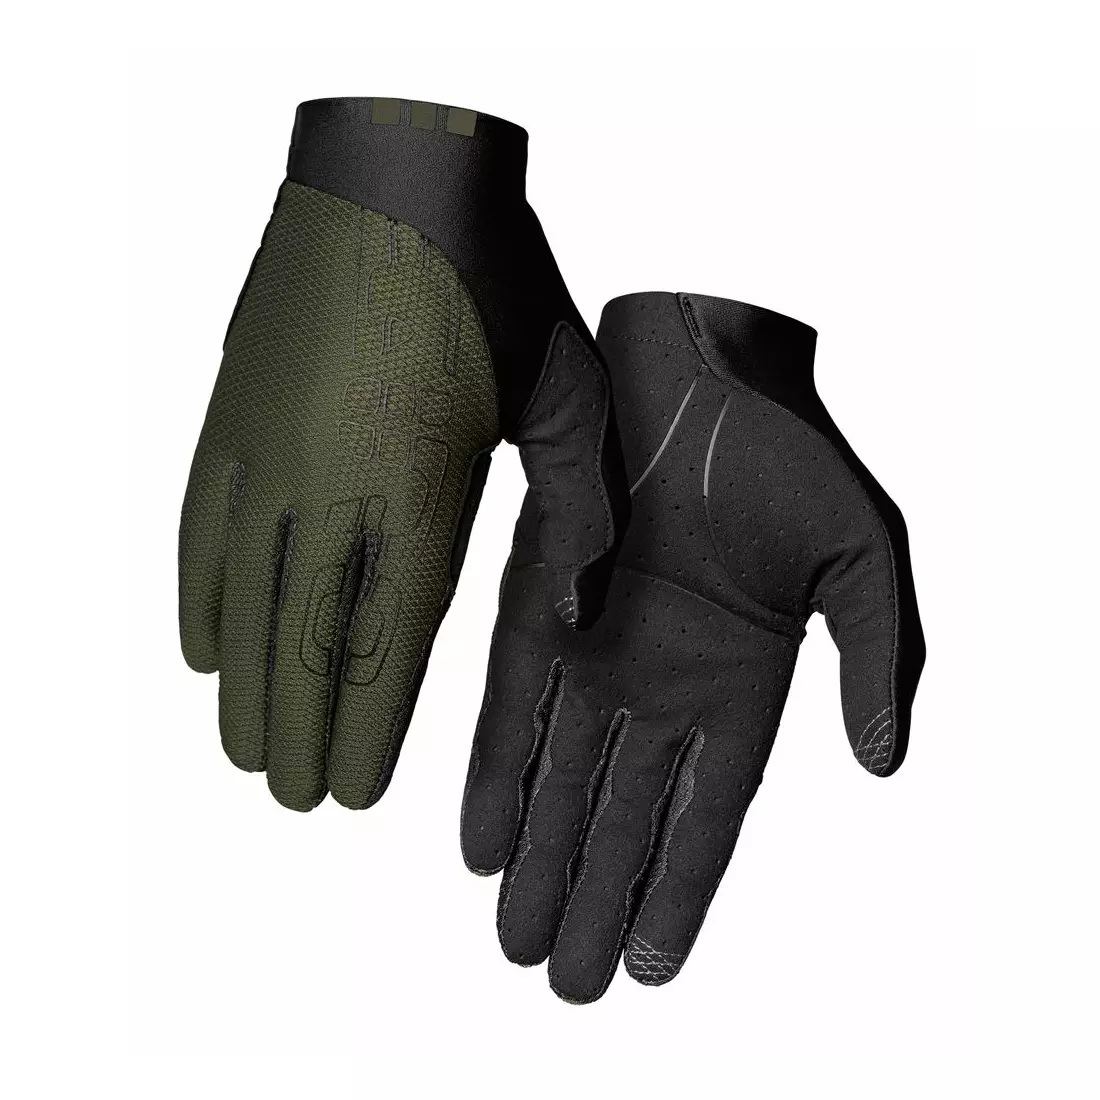 GIRO men's cycling gloves TRIXTER long finger olive GR-7127470